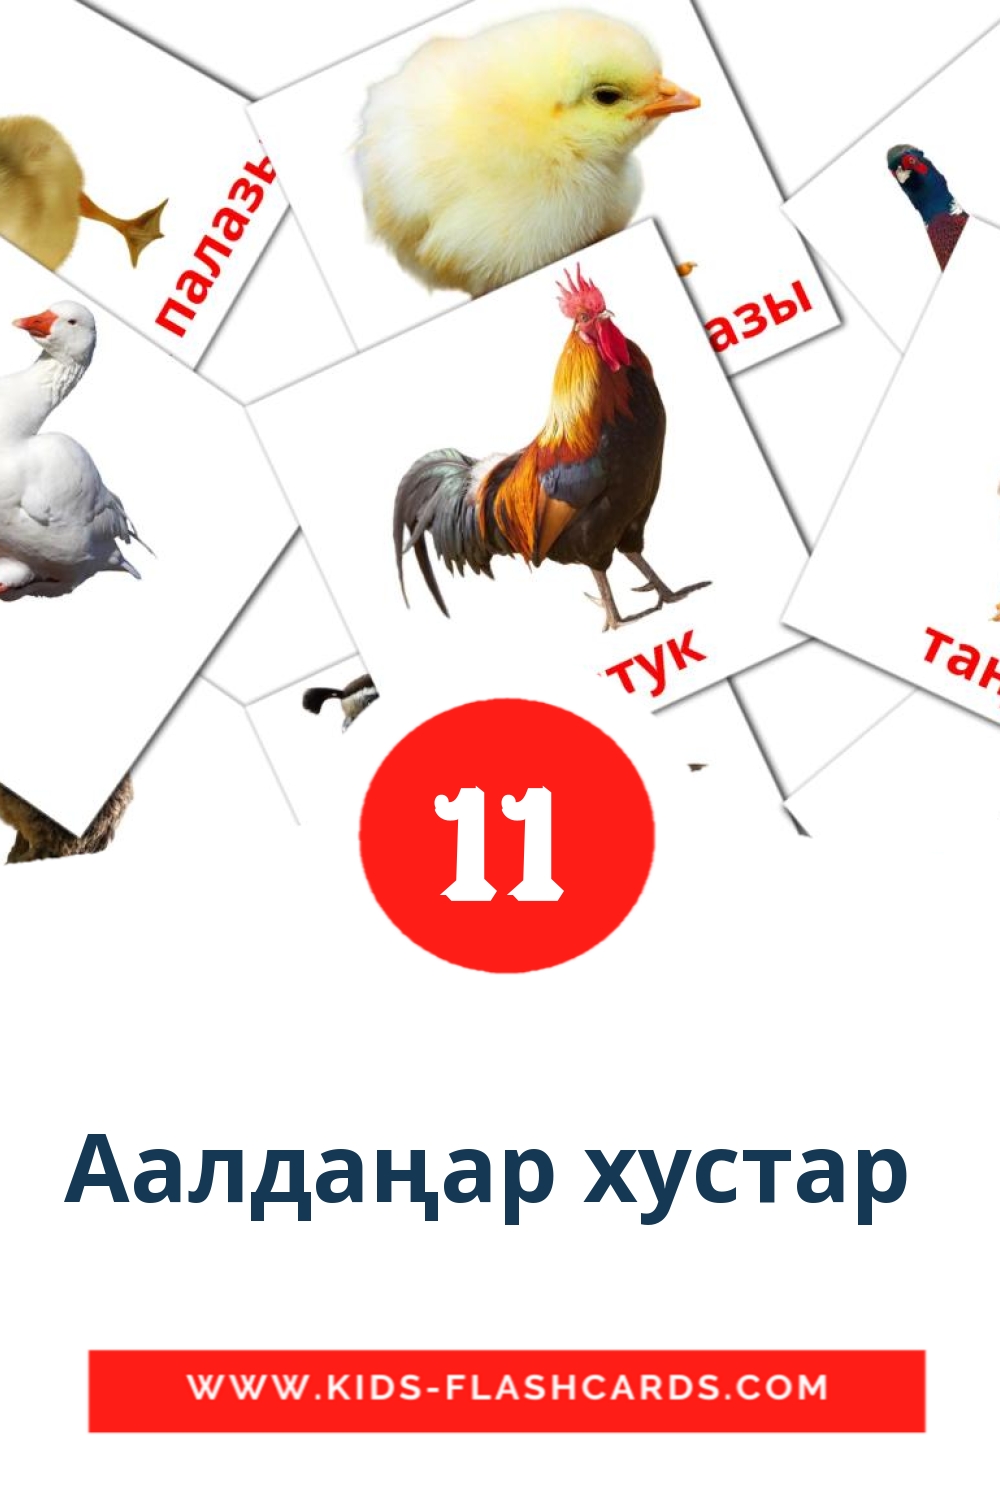 11 Аалдаңар хустар  fotokaarten voor kleuters in het kyrgyz